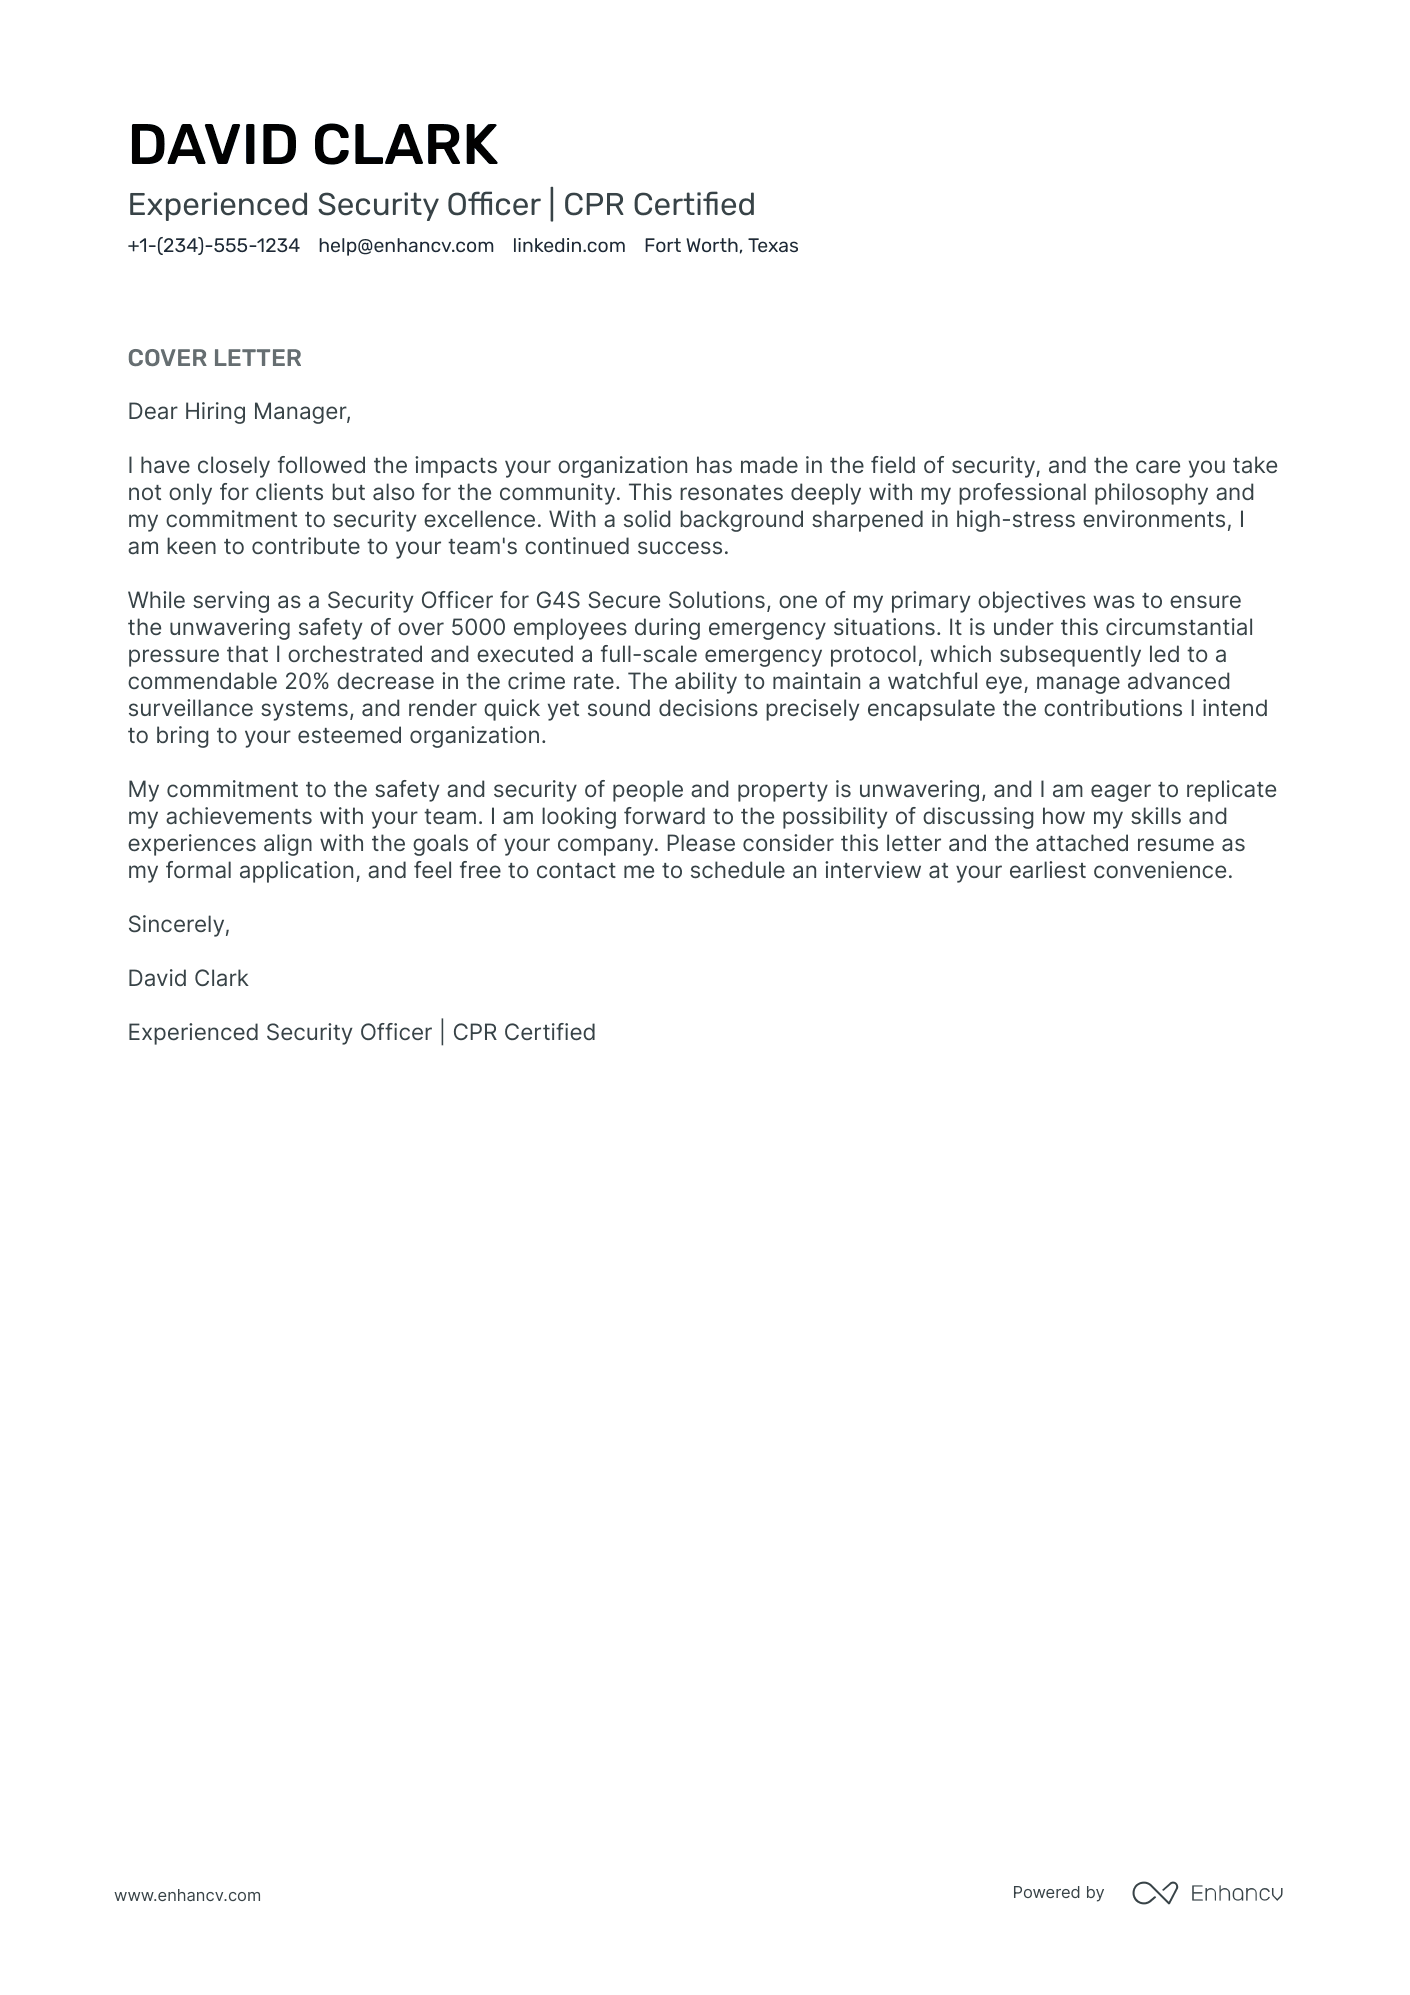 application letter for security officer job